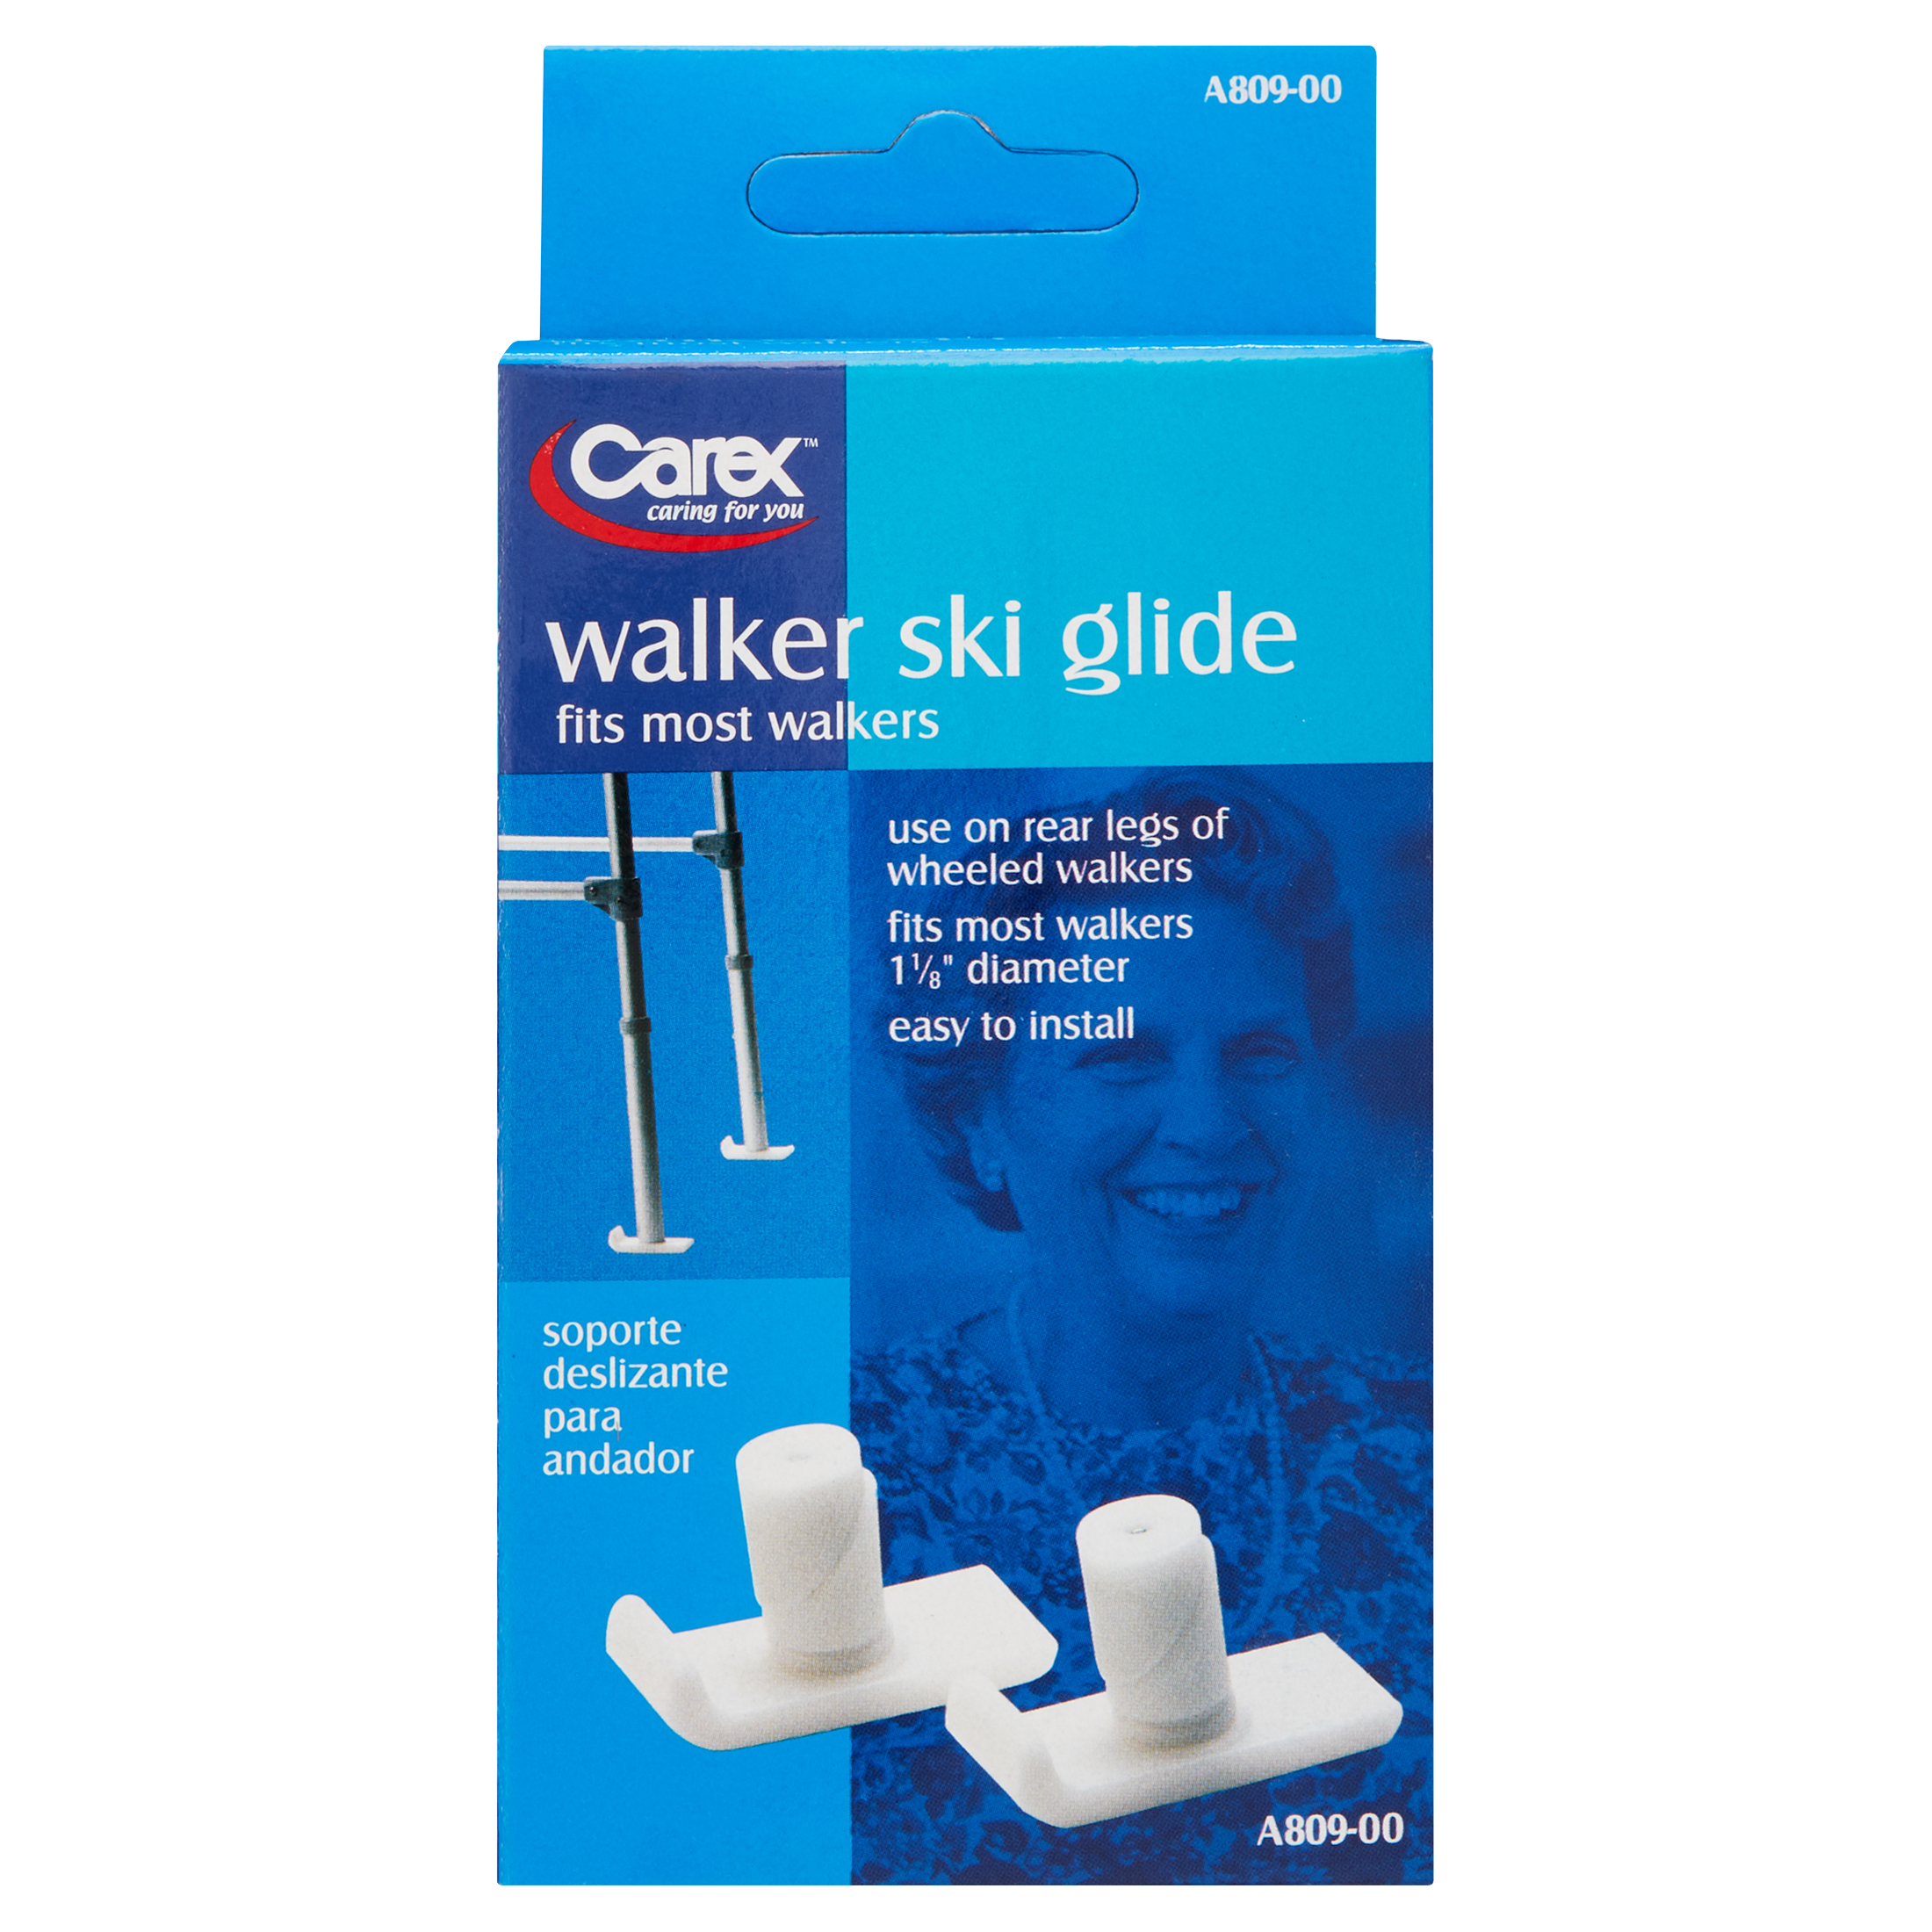 Carex Plastic Walker Ski Glides, Fits Most Walkers, Use Indoor or Outdoor, White - image 1 of 6